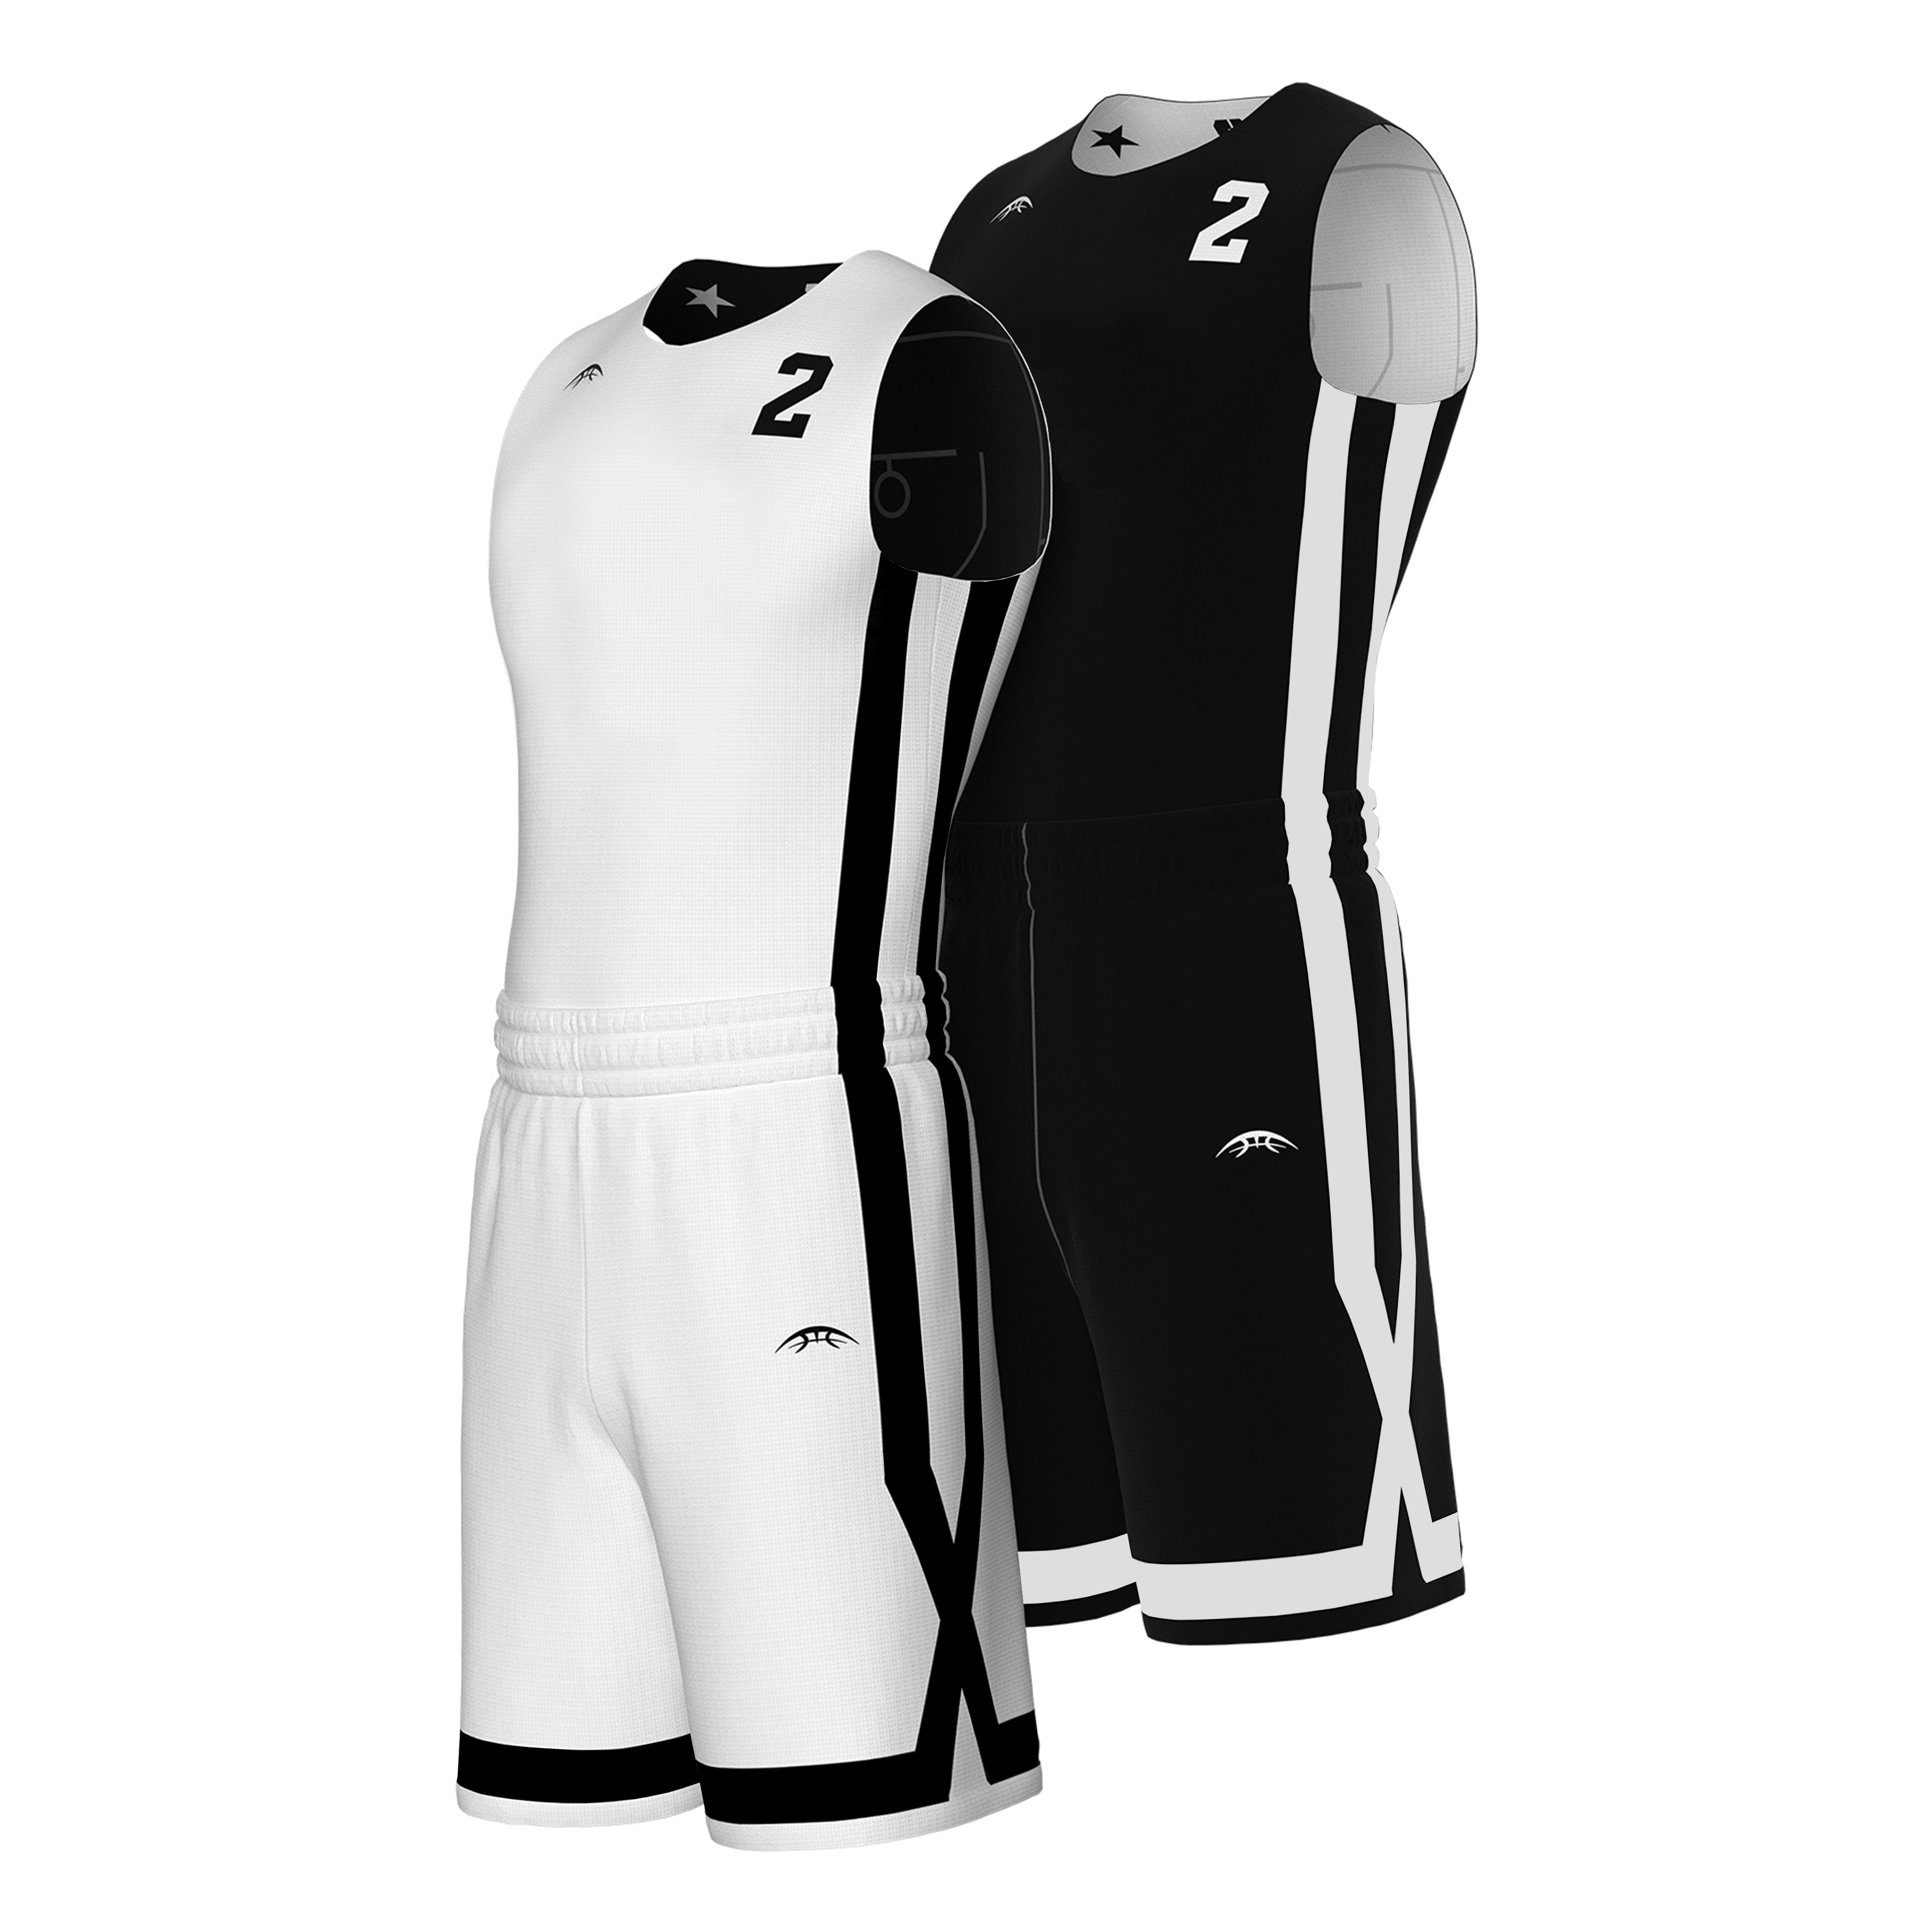 Custom Basketball Uniforms, Basketball Jersey Designs